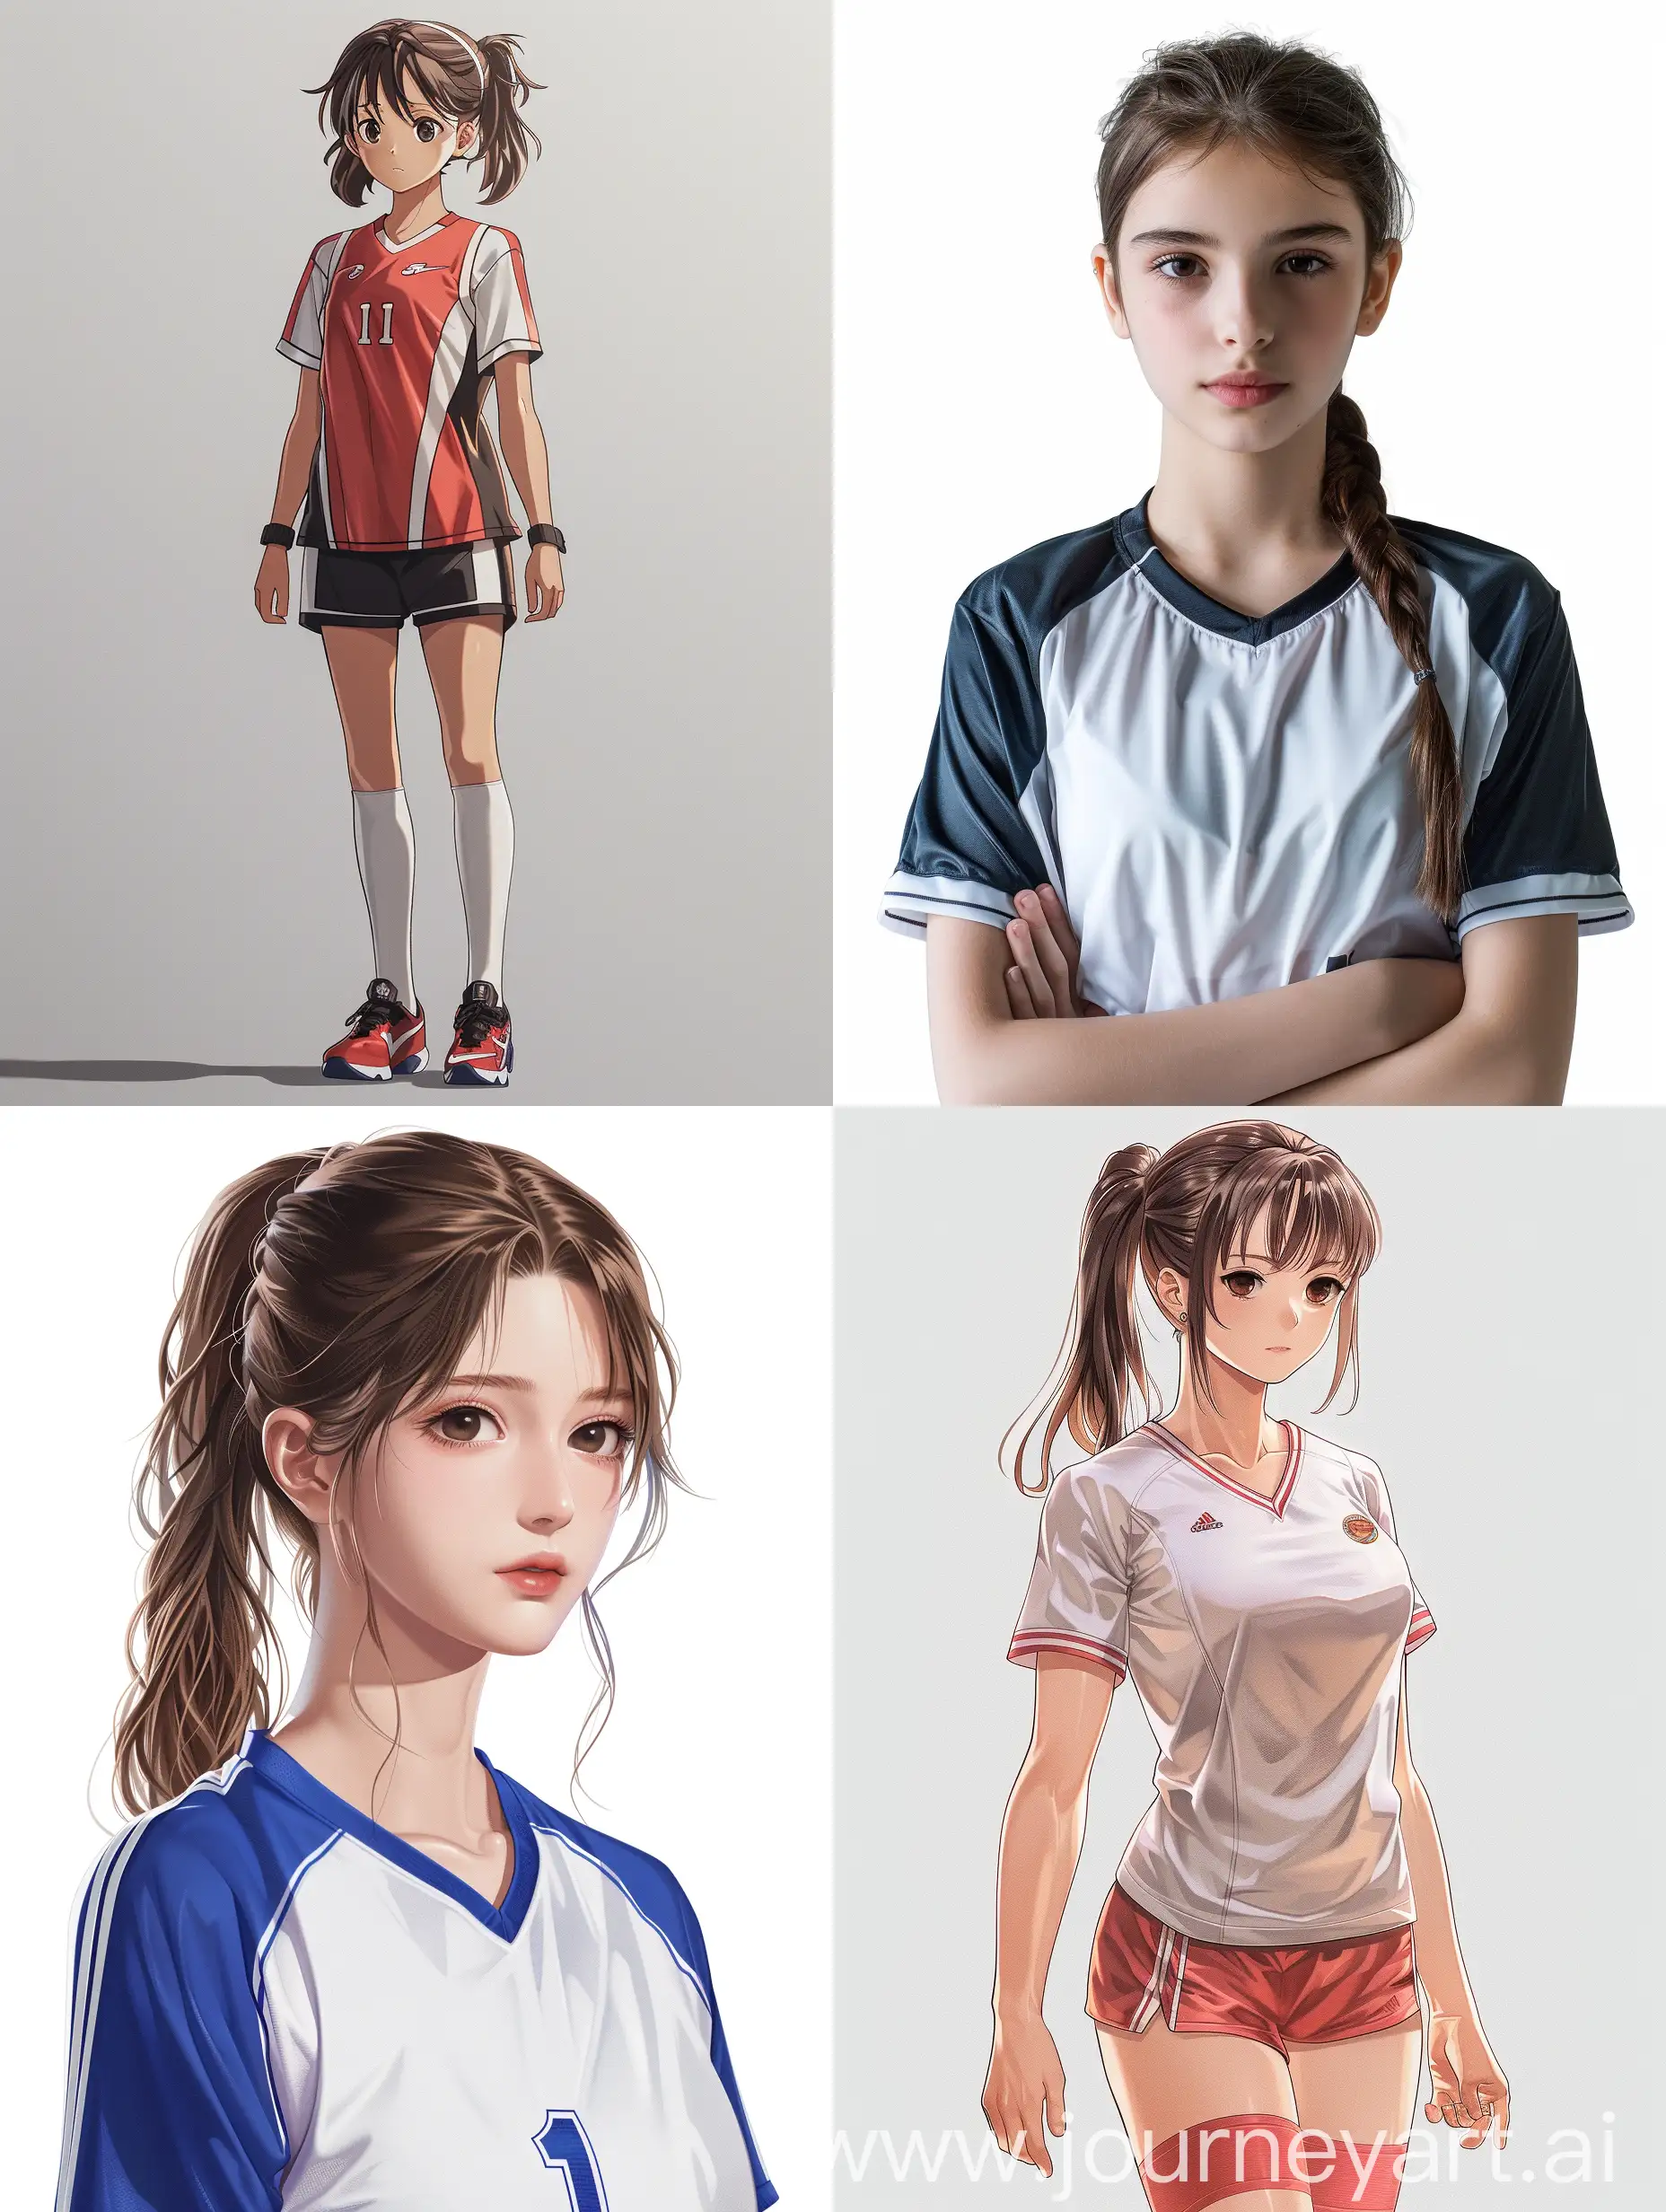 Realistic-EighteenYearOld-Girl-in-Sports-Uniform-Portrait